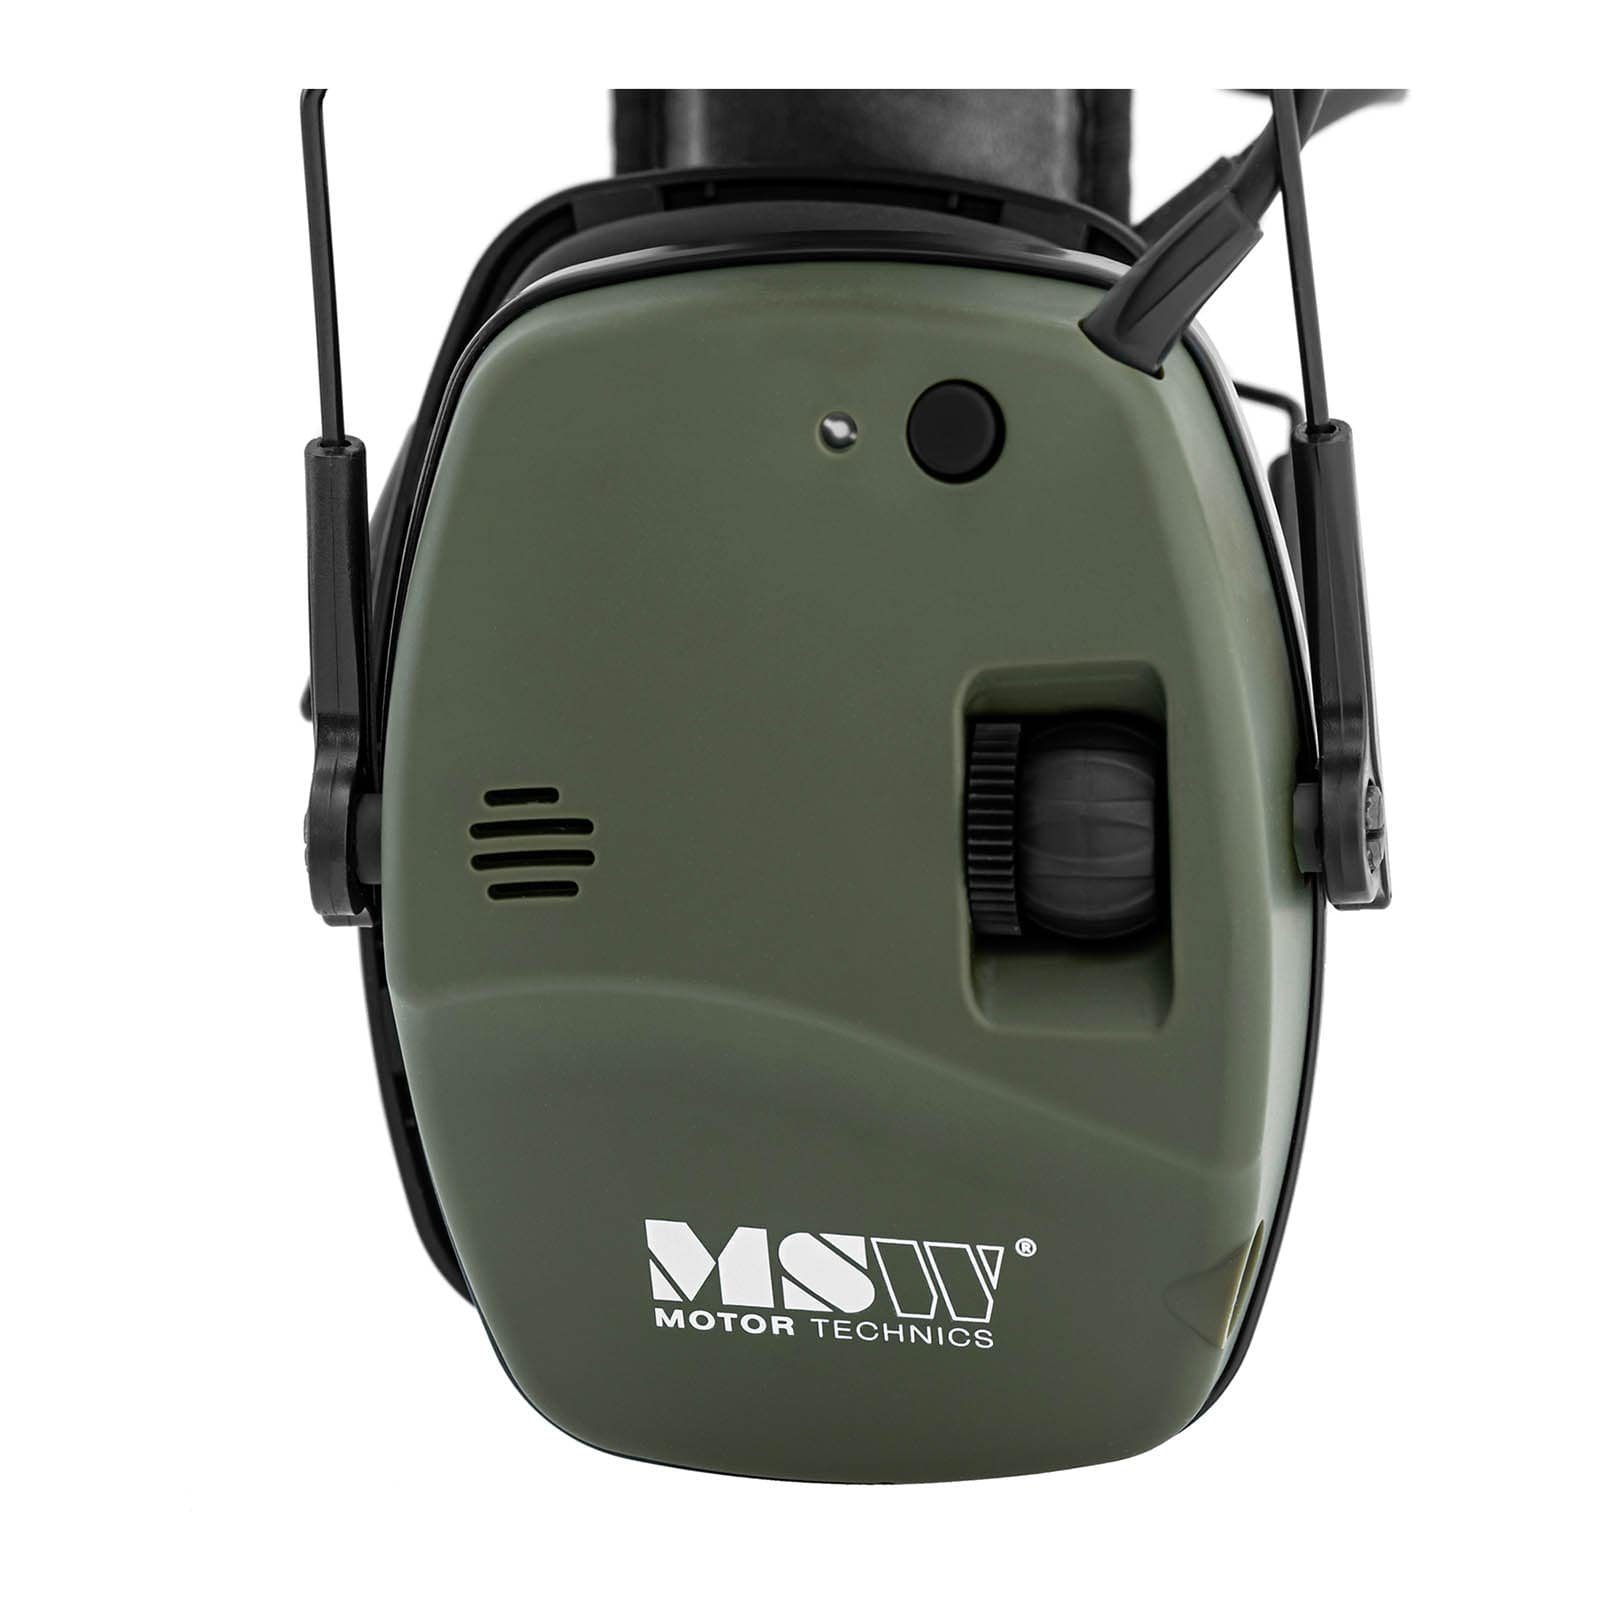 Lärmschutzkopfhörer Kapselgehörschutz Bluetooth, MSW Außengeräuschregelung